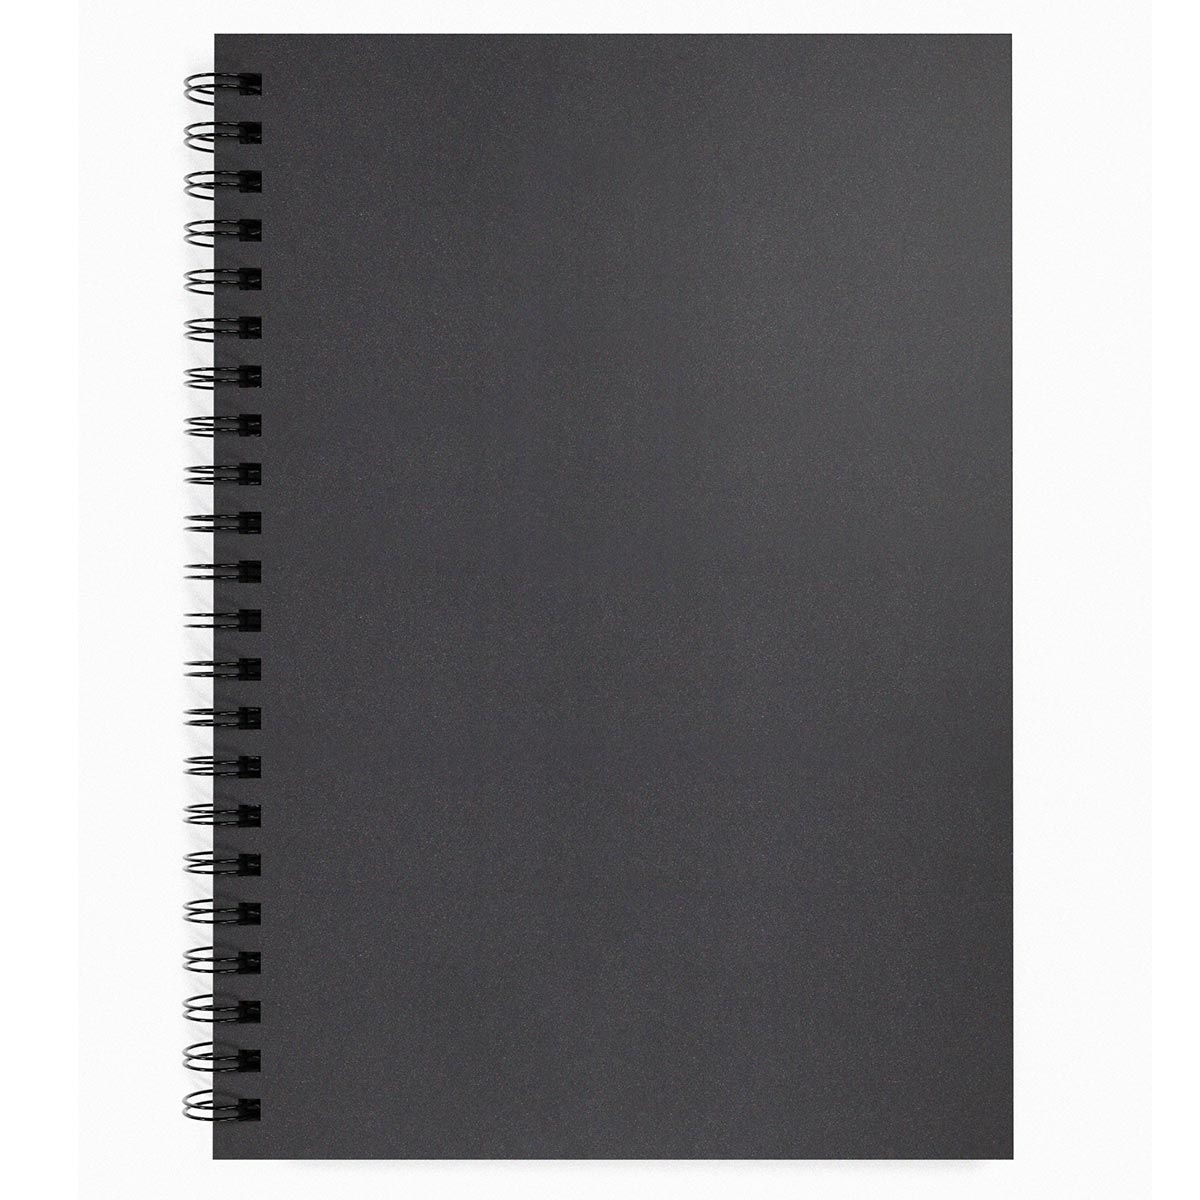 Artgecko - Oombrato Schipt Black Sketchbook - A3 Portrait